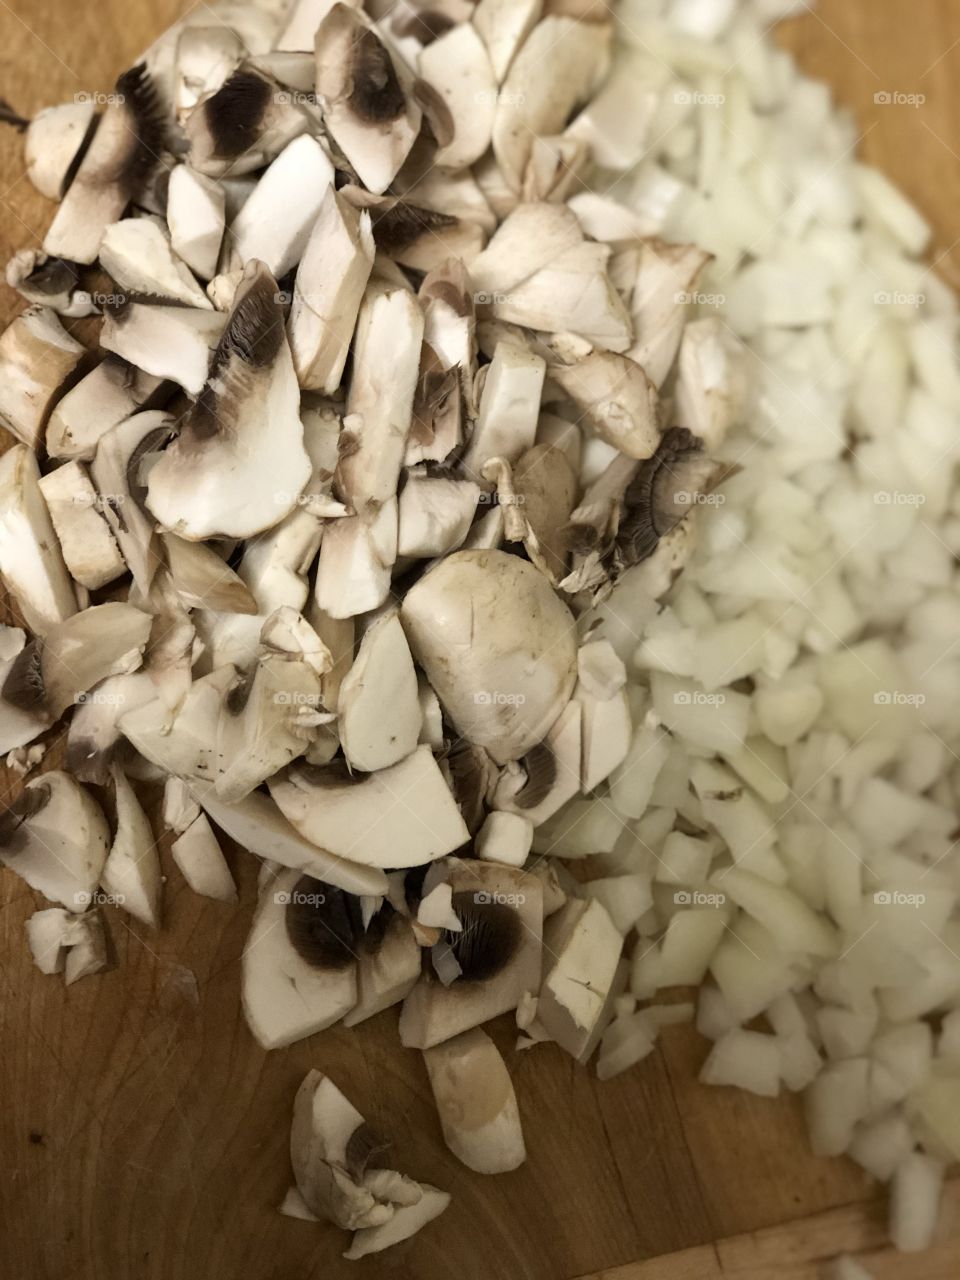 Mushrooms and onions favorite ingredients 